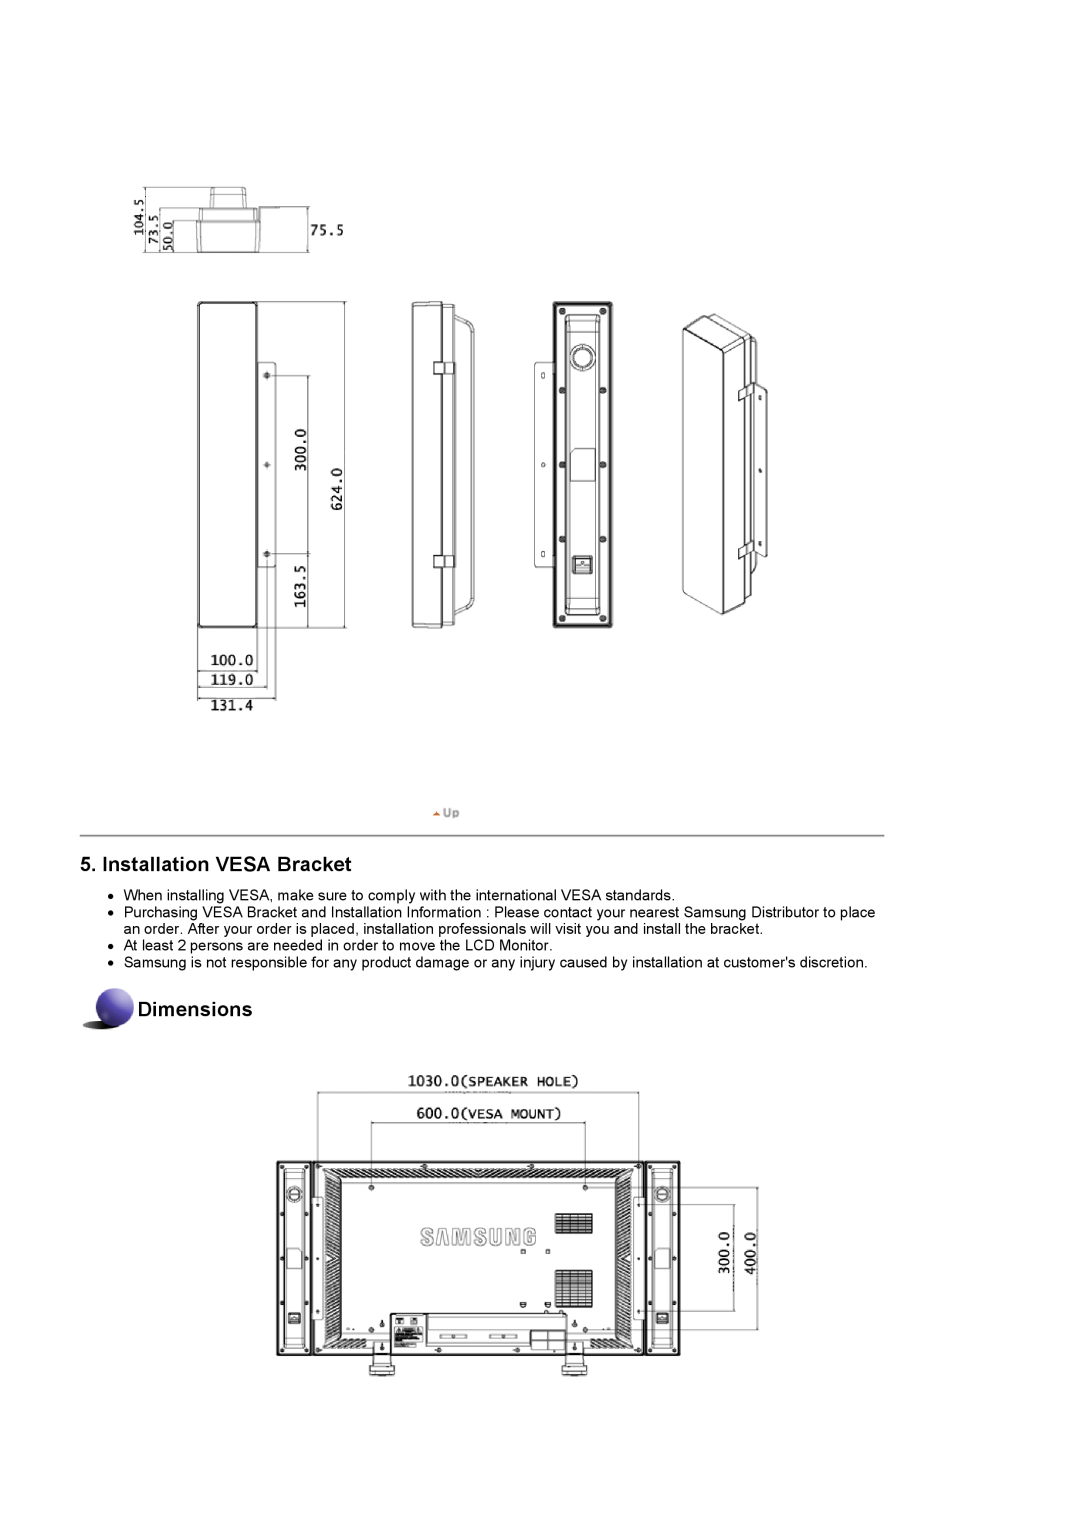 Samsung 460DX, 400DX specifications Installation VESA Bracket, Dimensions 